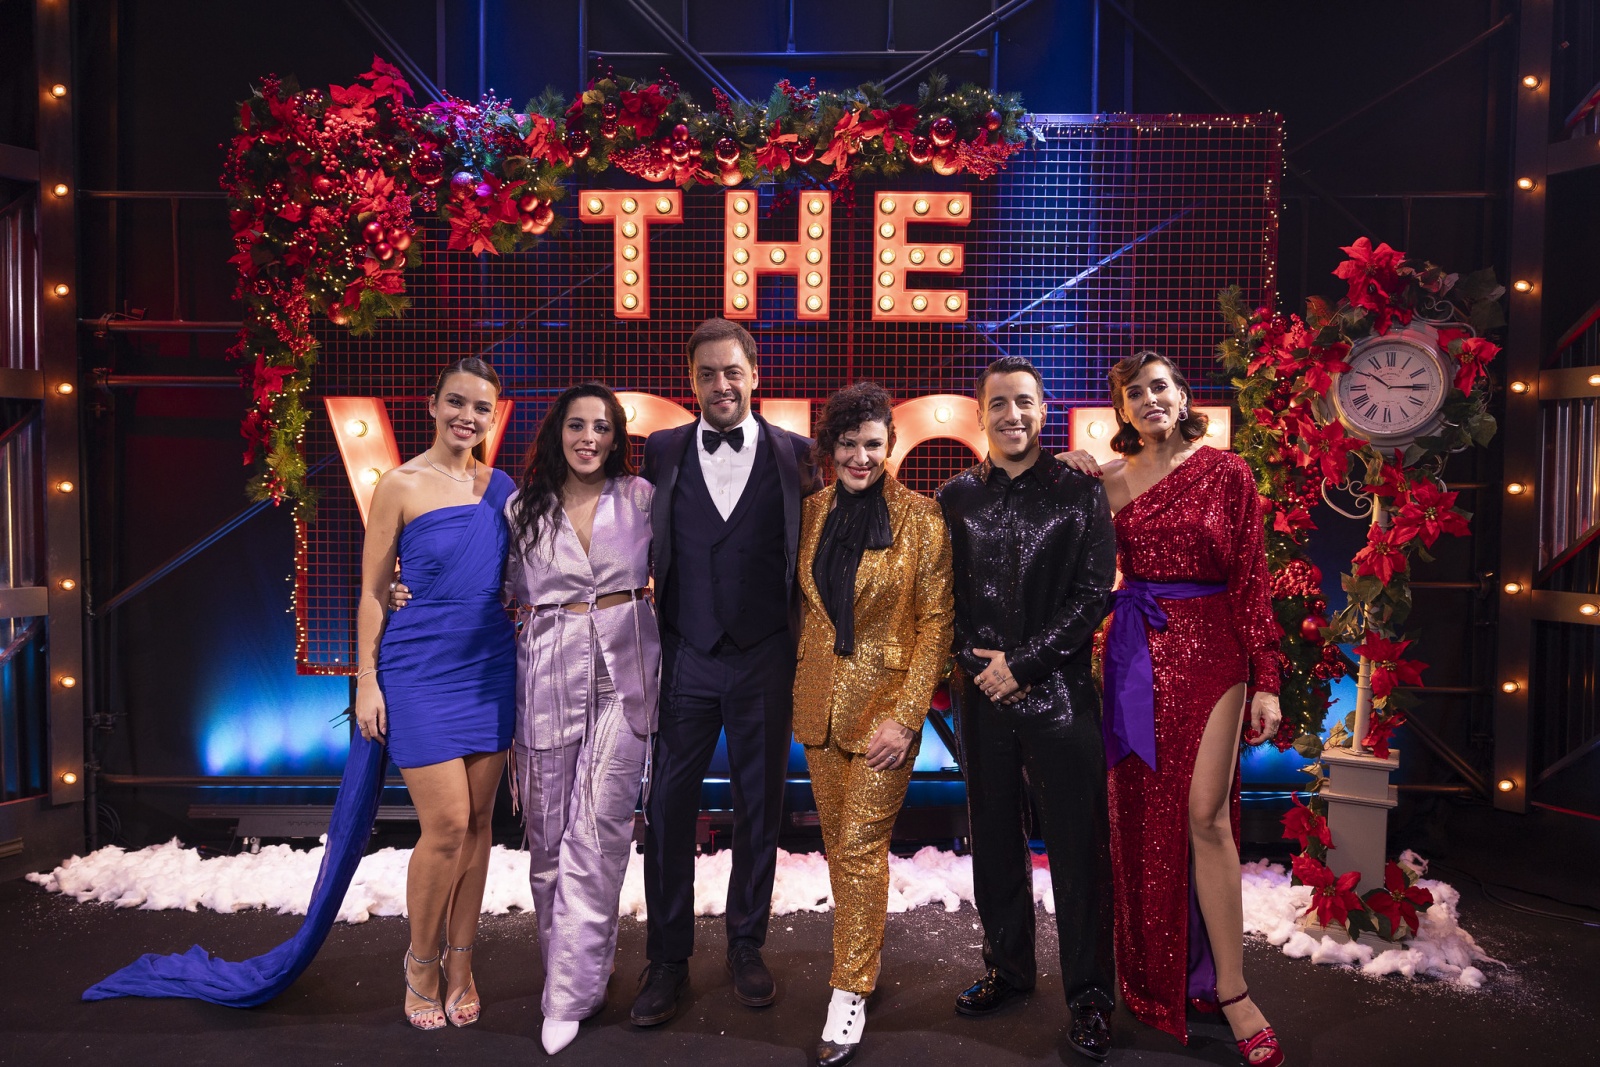 Especial de Natal do "The Voice" reúne artistas e concorrentes